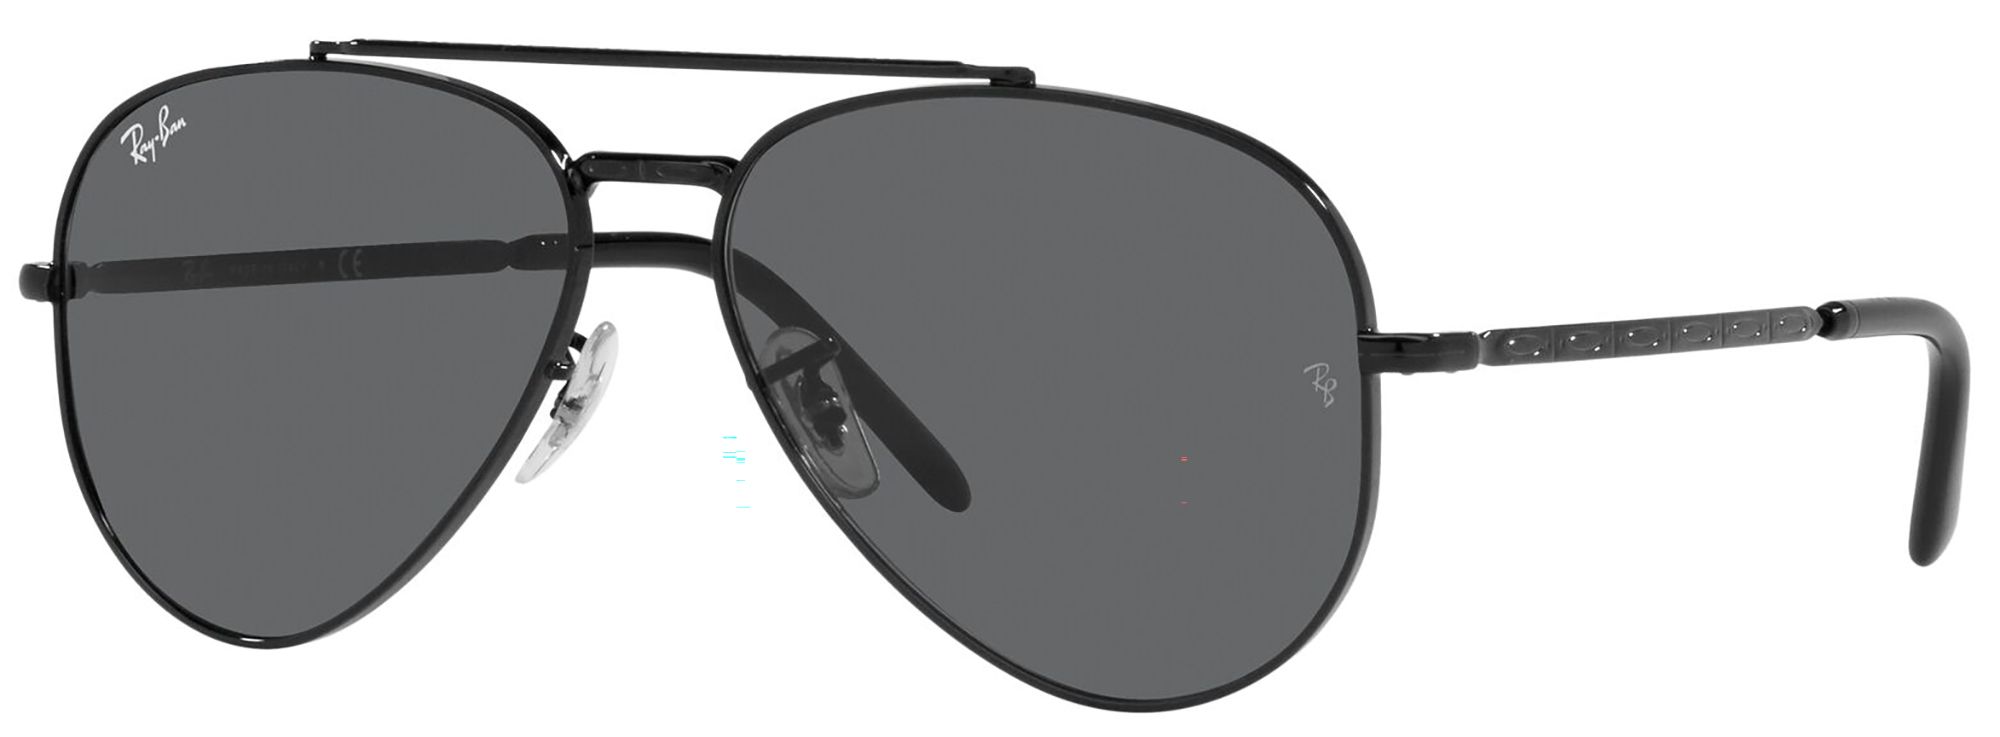 Photos - Sunglasses Ray-Ban New Aviator , Men's, Black/Dark Grey 22RYBUNWVTRBLCKWDGA 